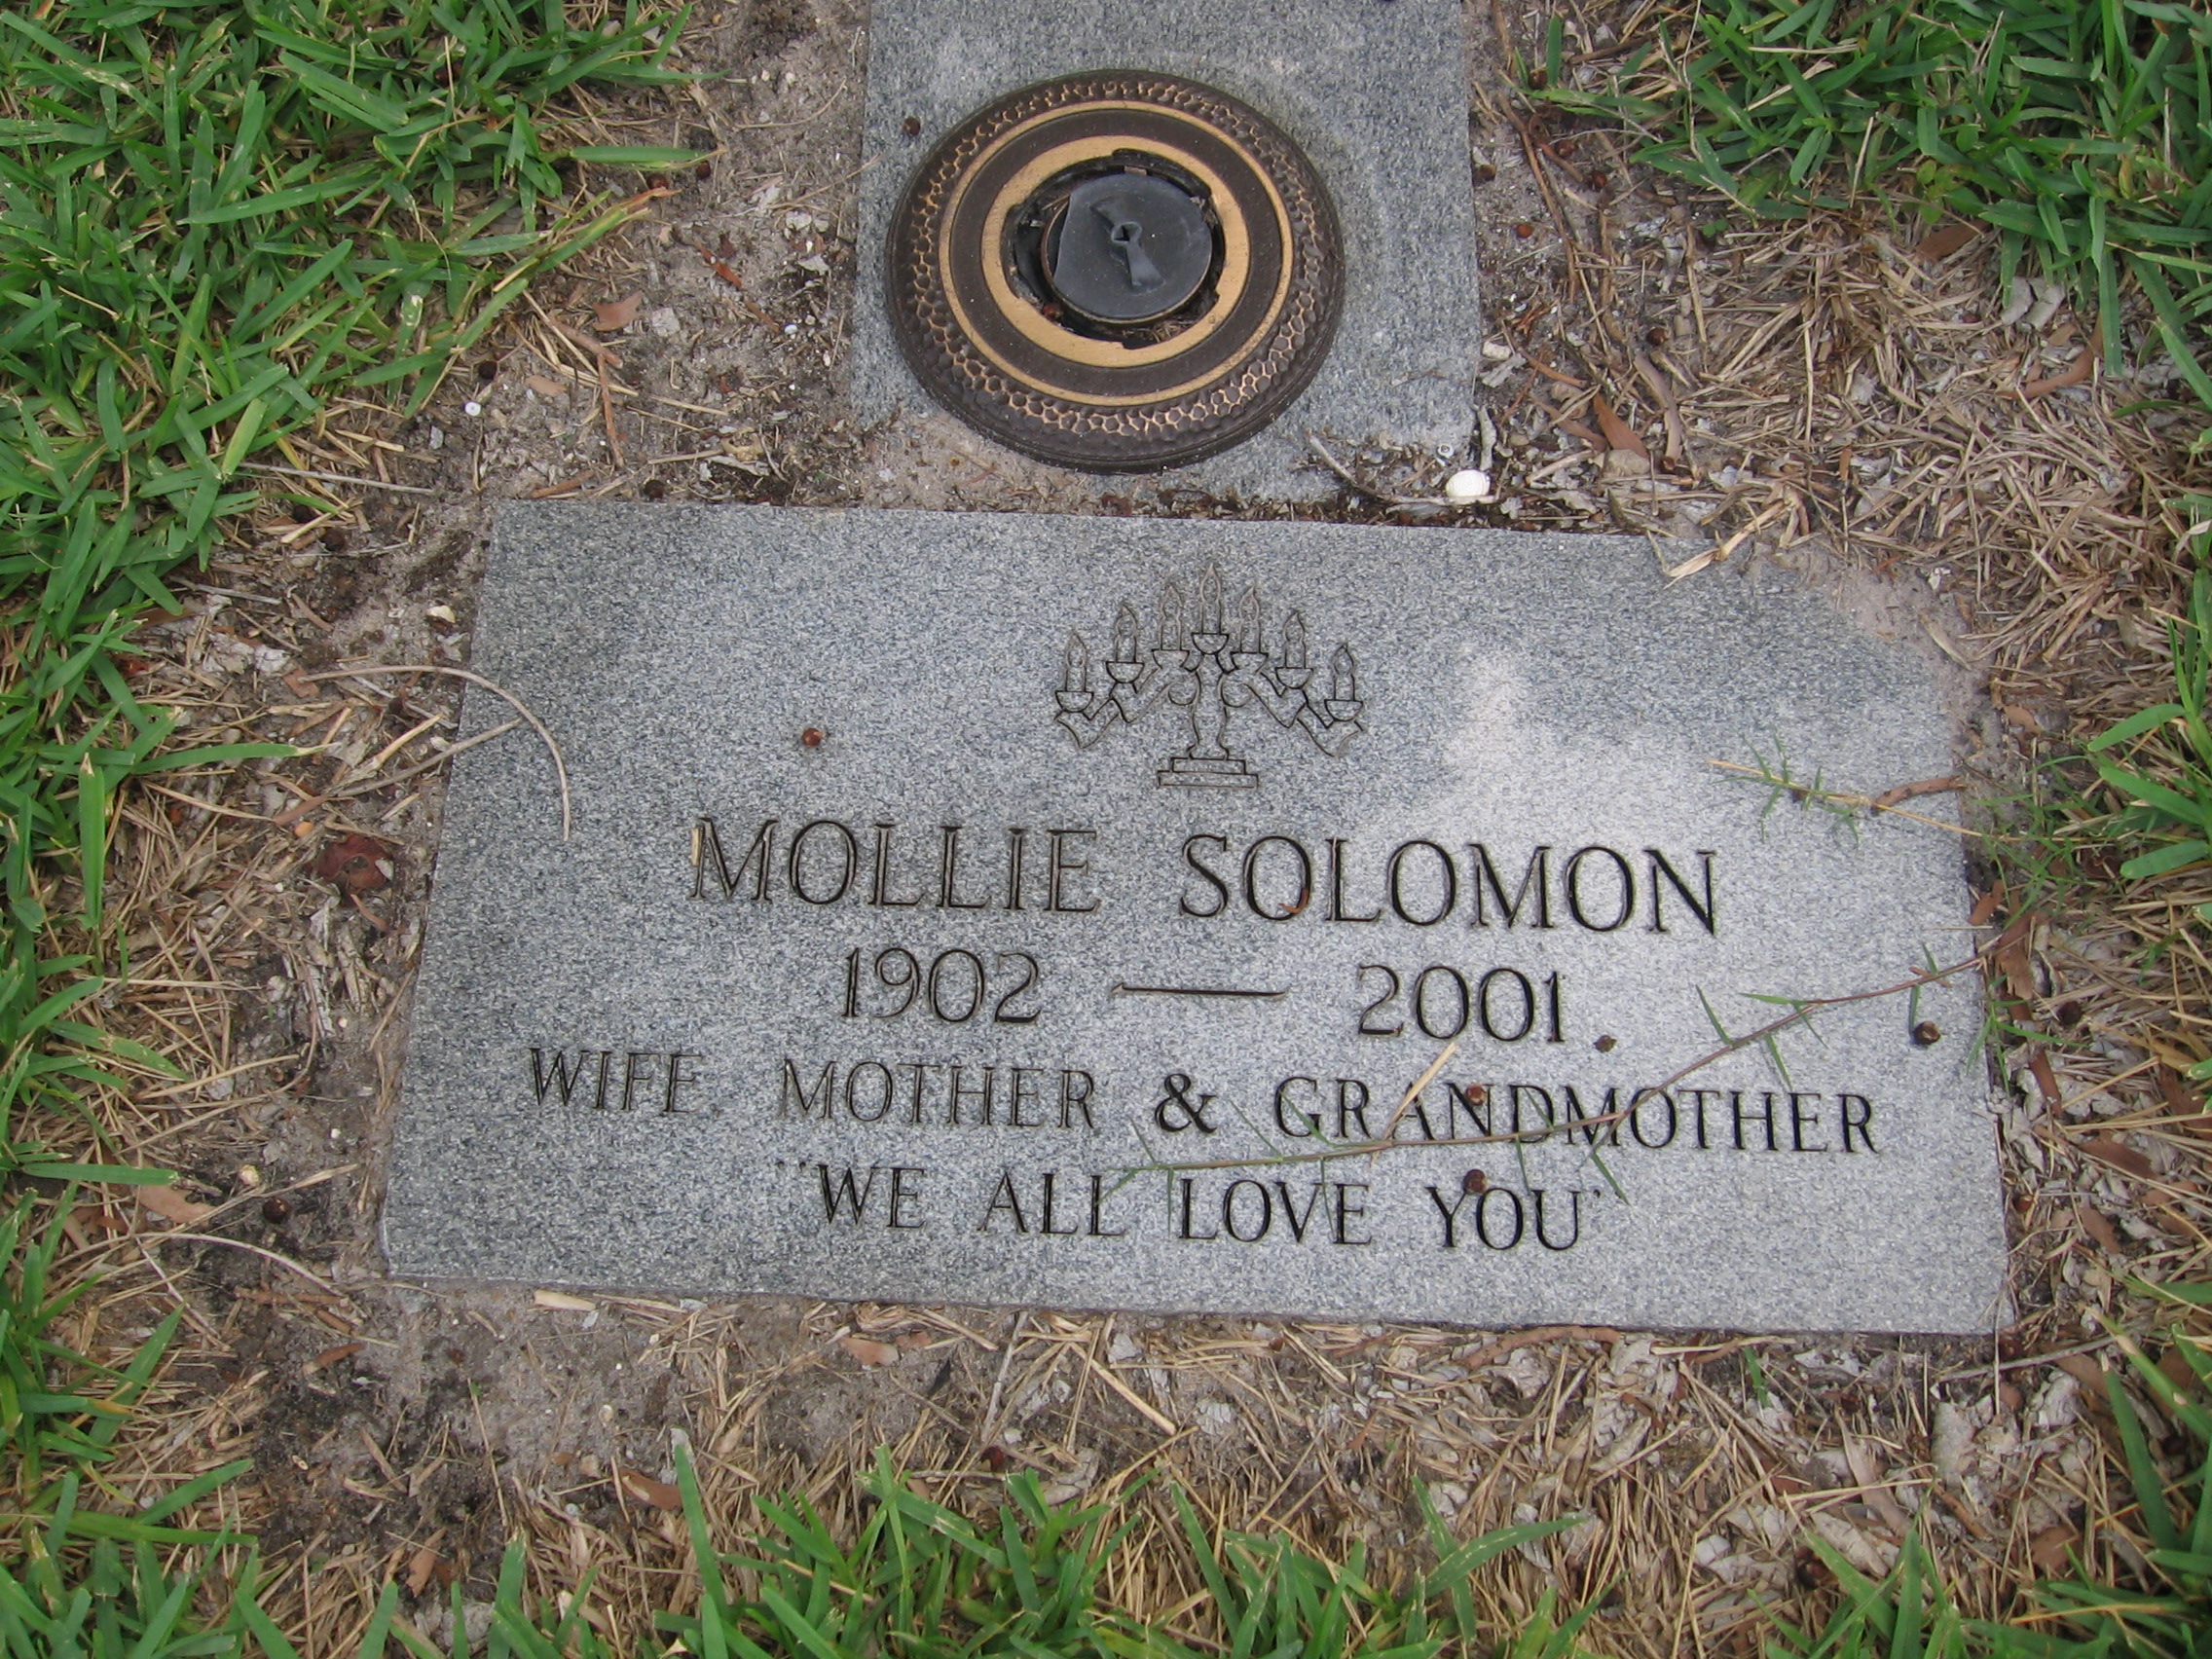 Mollie Solomon